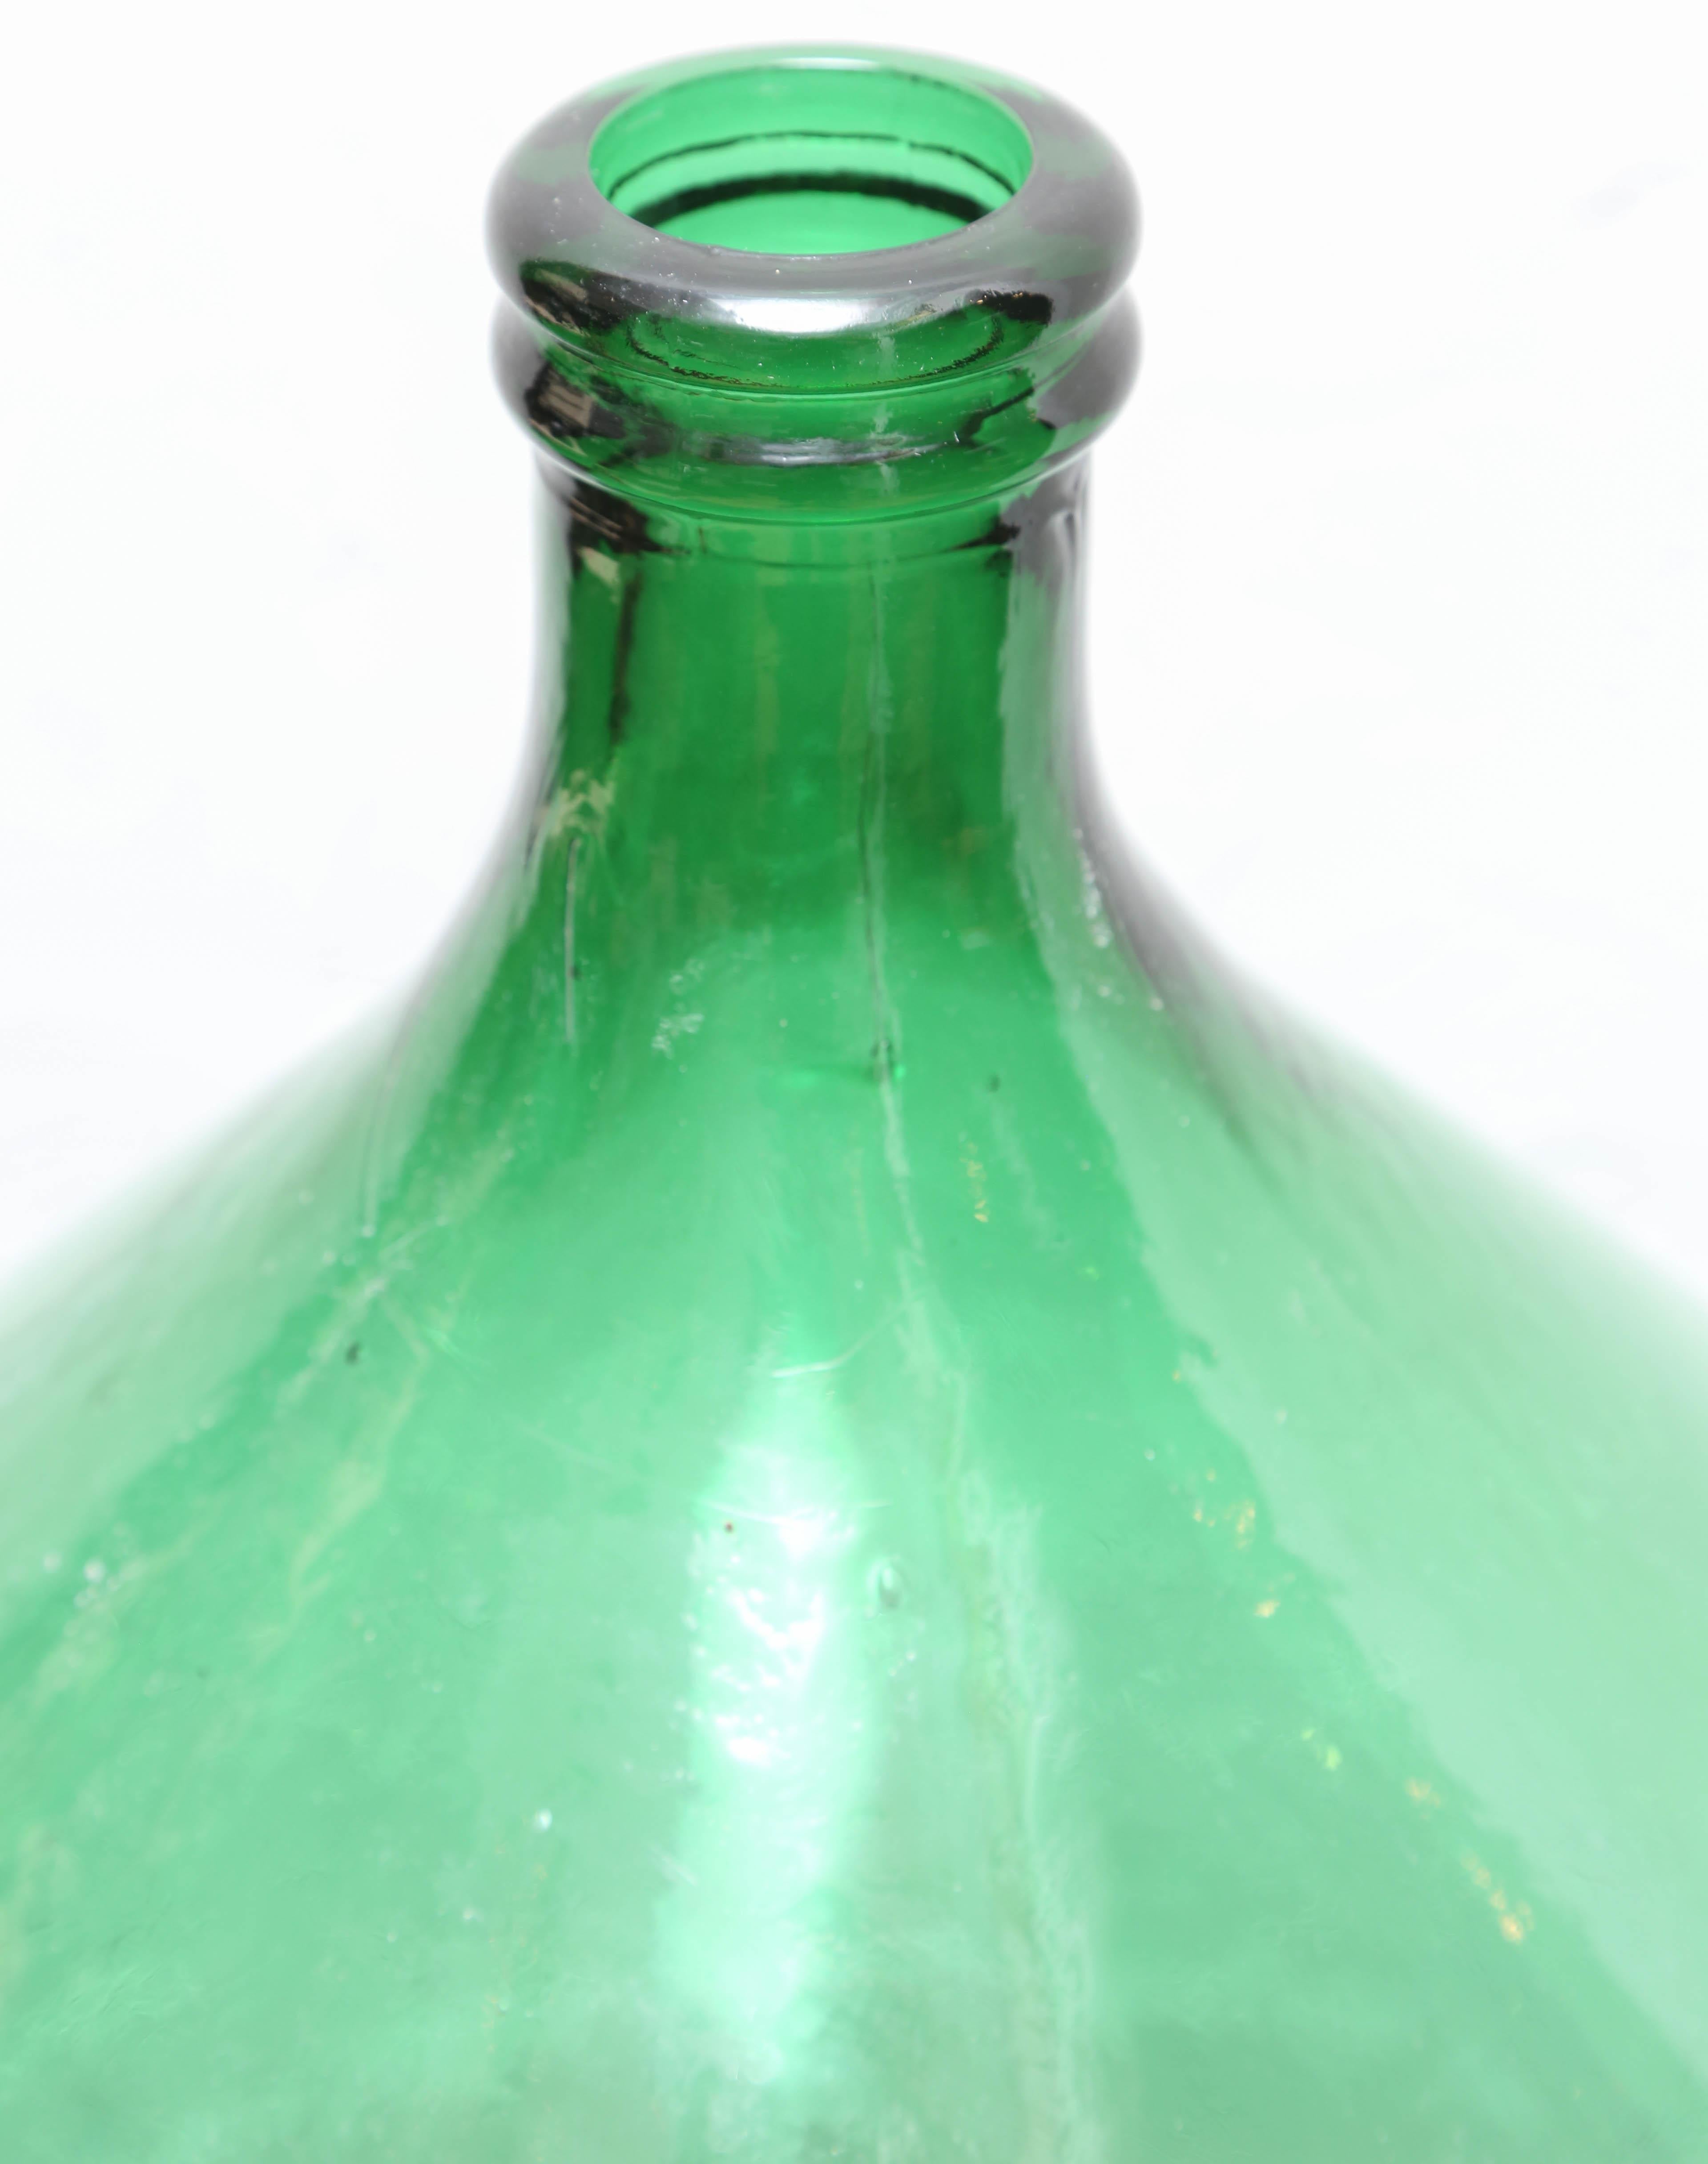 big green glass bottle